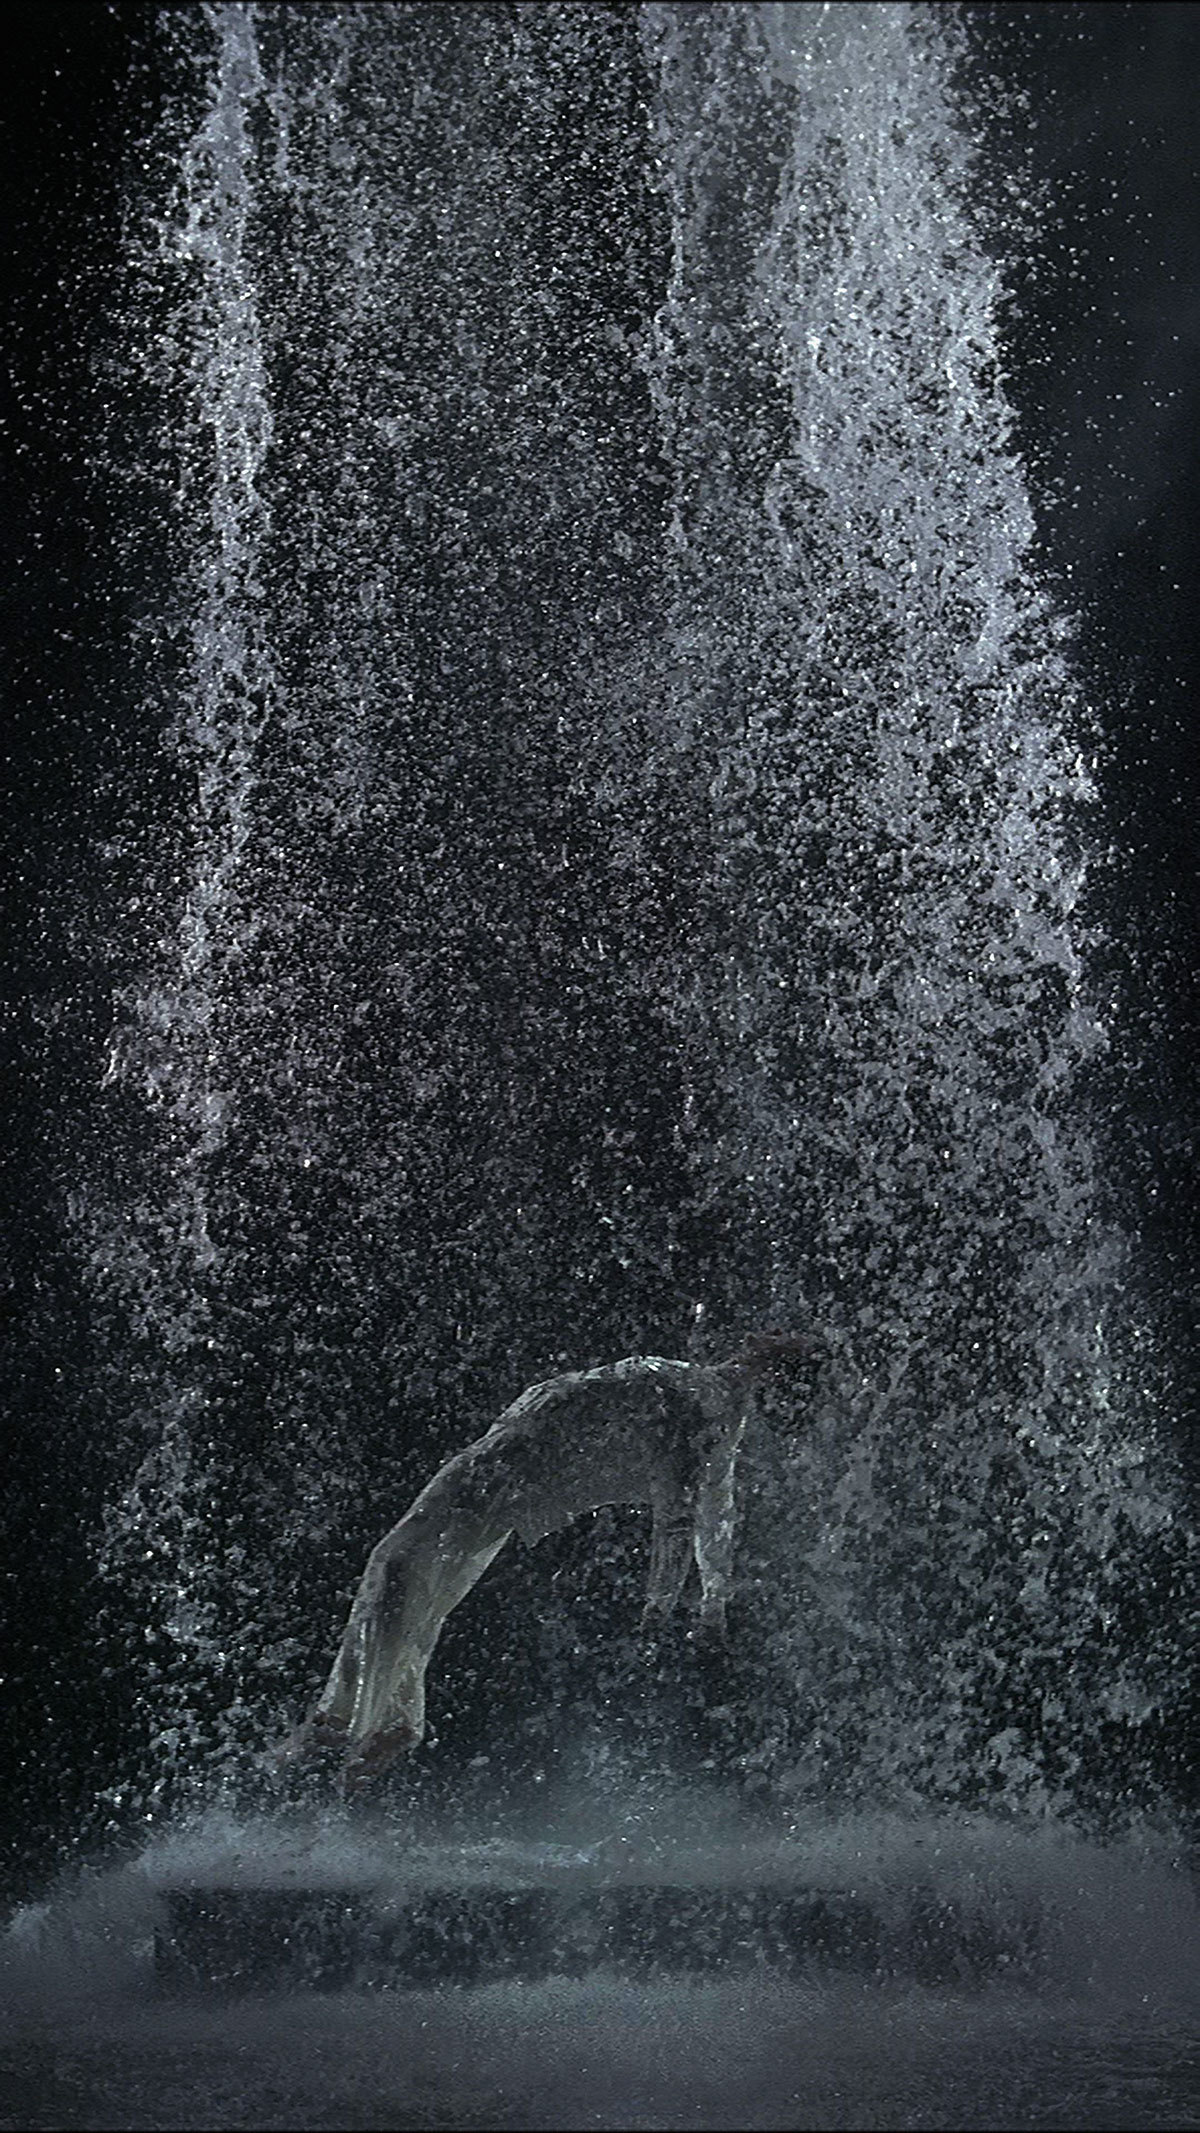 Bill Viola, Tristan’s Ascension (The Sound of a Mountain Under a Waterfall), 2005. Video/sound installation. Performer: John Hay. Courtesy Bill Viola Studio. Photo: Kira Perov.